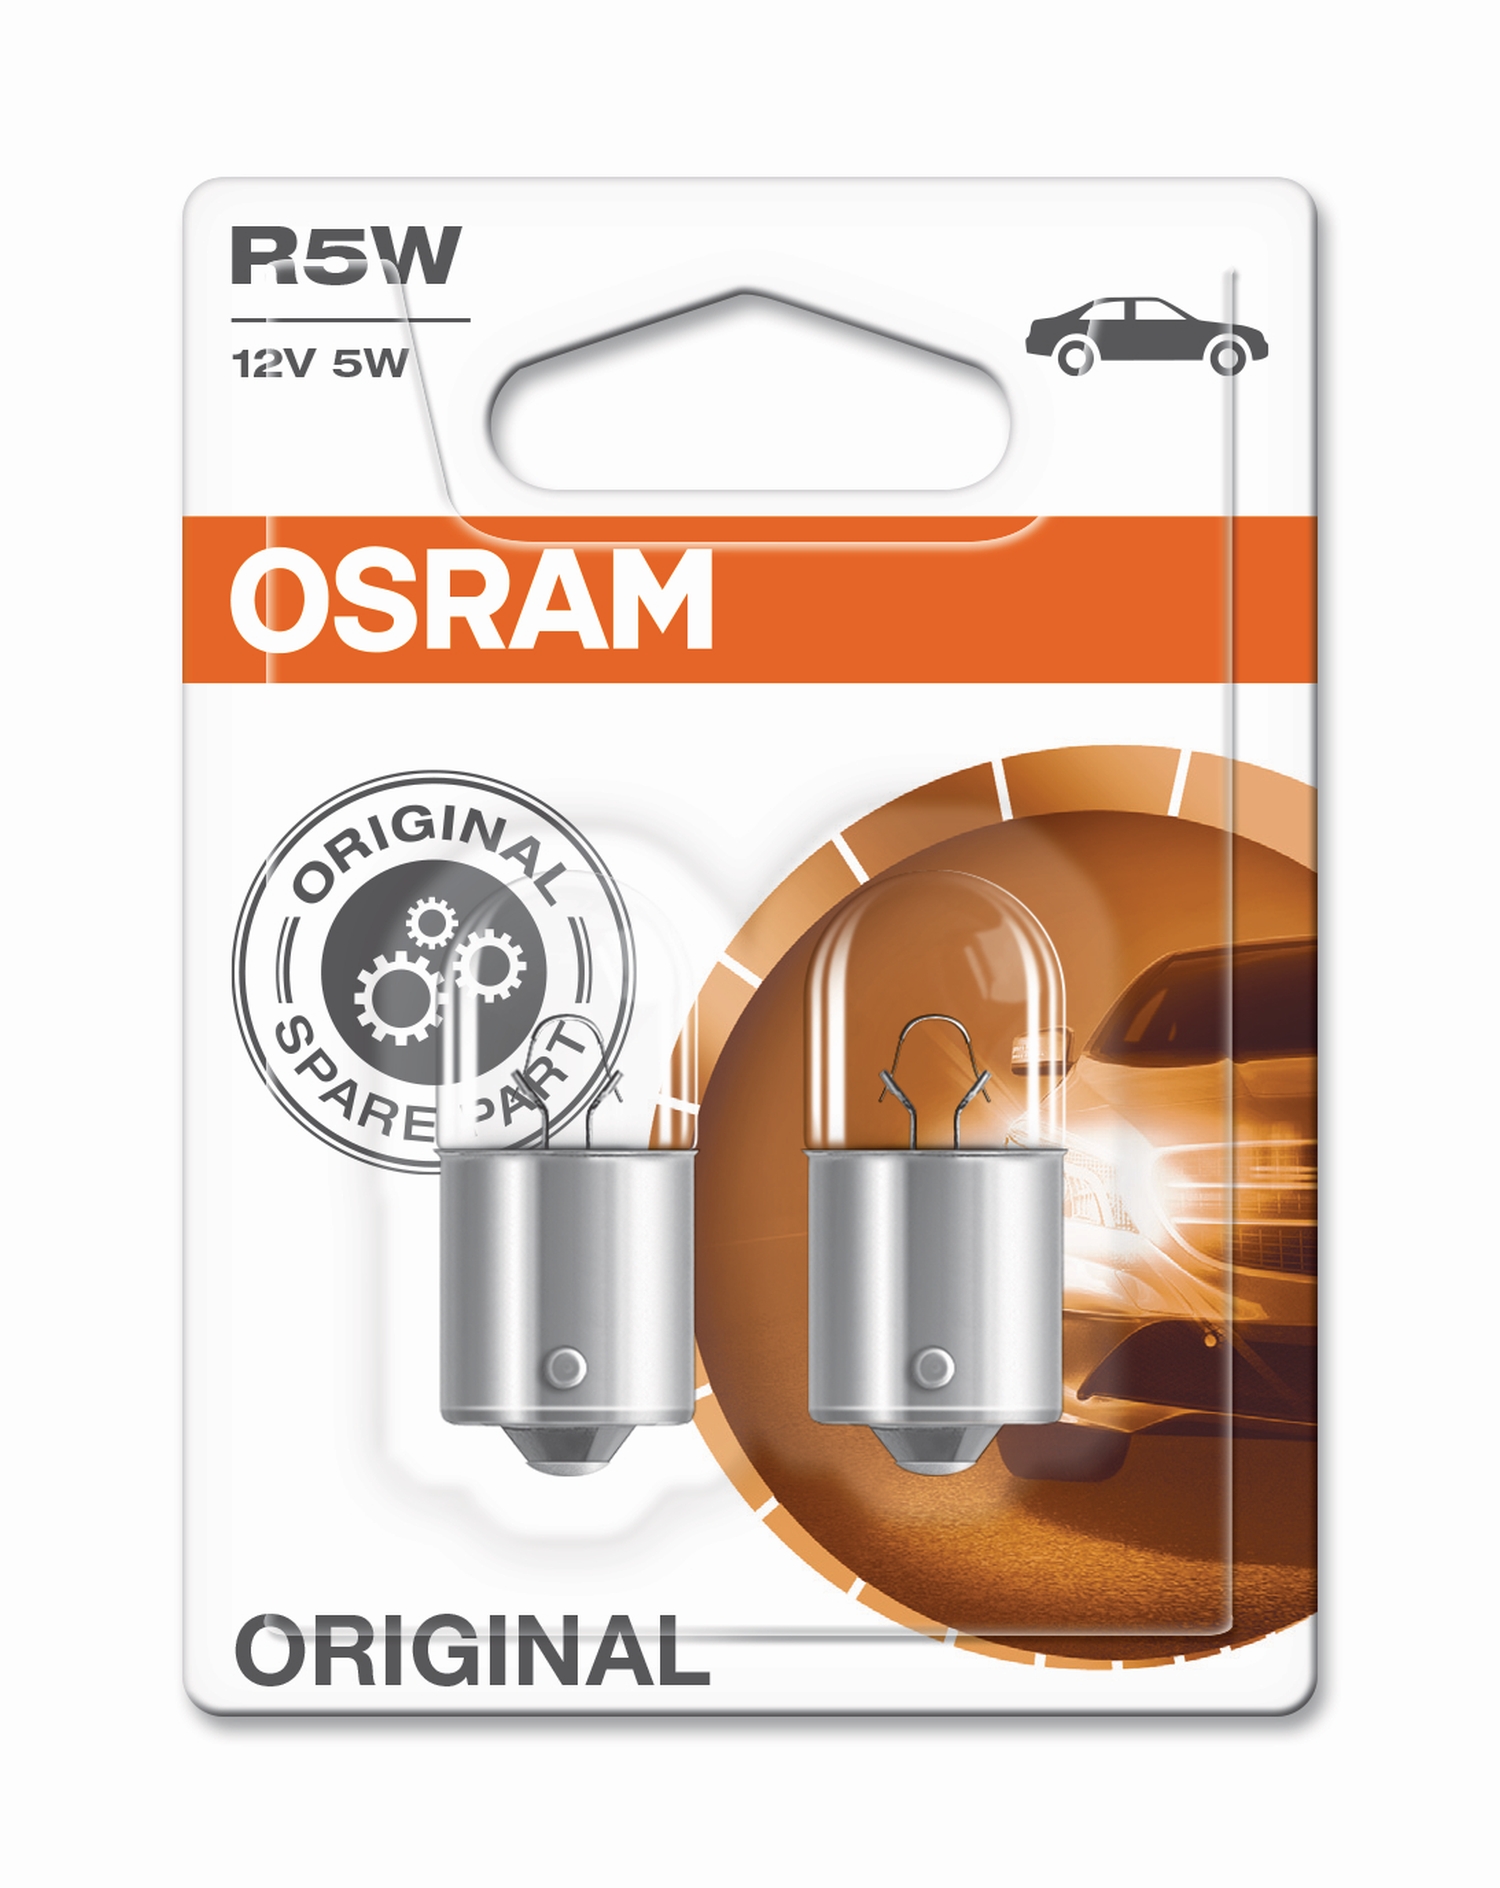 OSRAM Schlusslicht R5W-12V-5W-BA15s